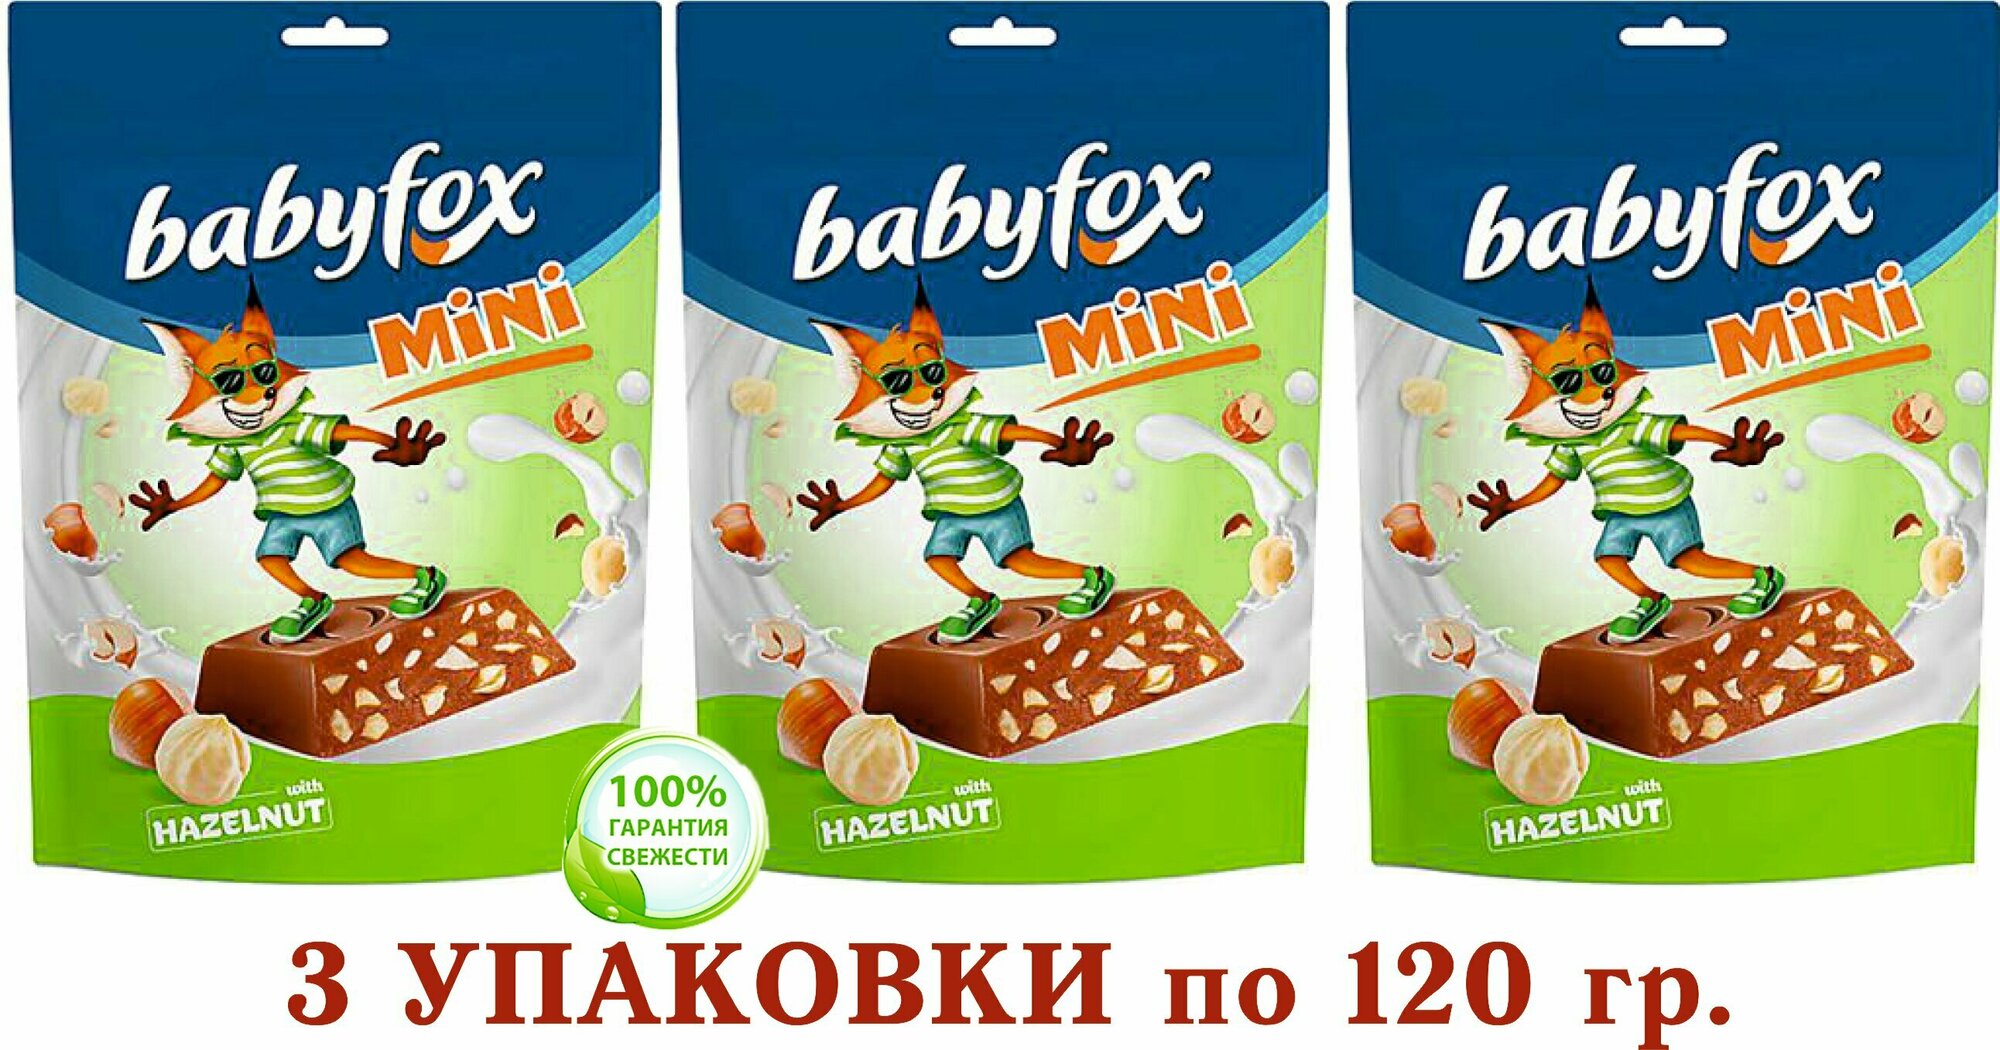 Конфеты шоколадные "BabyFox" (Бэби Фокс) mini с фундуком, 3 уп. * 120 грамм